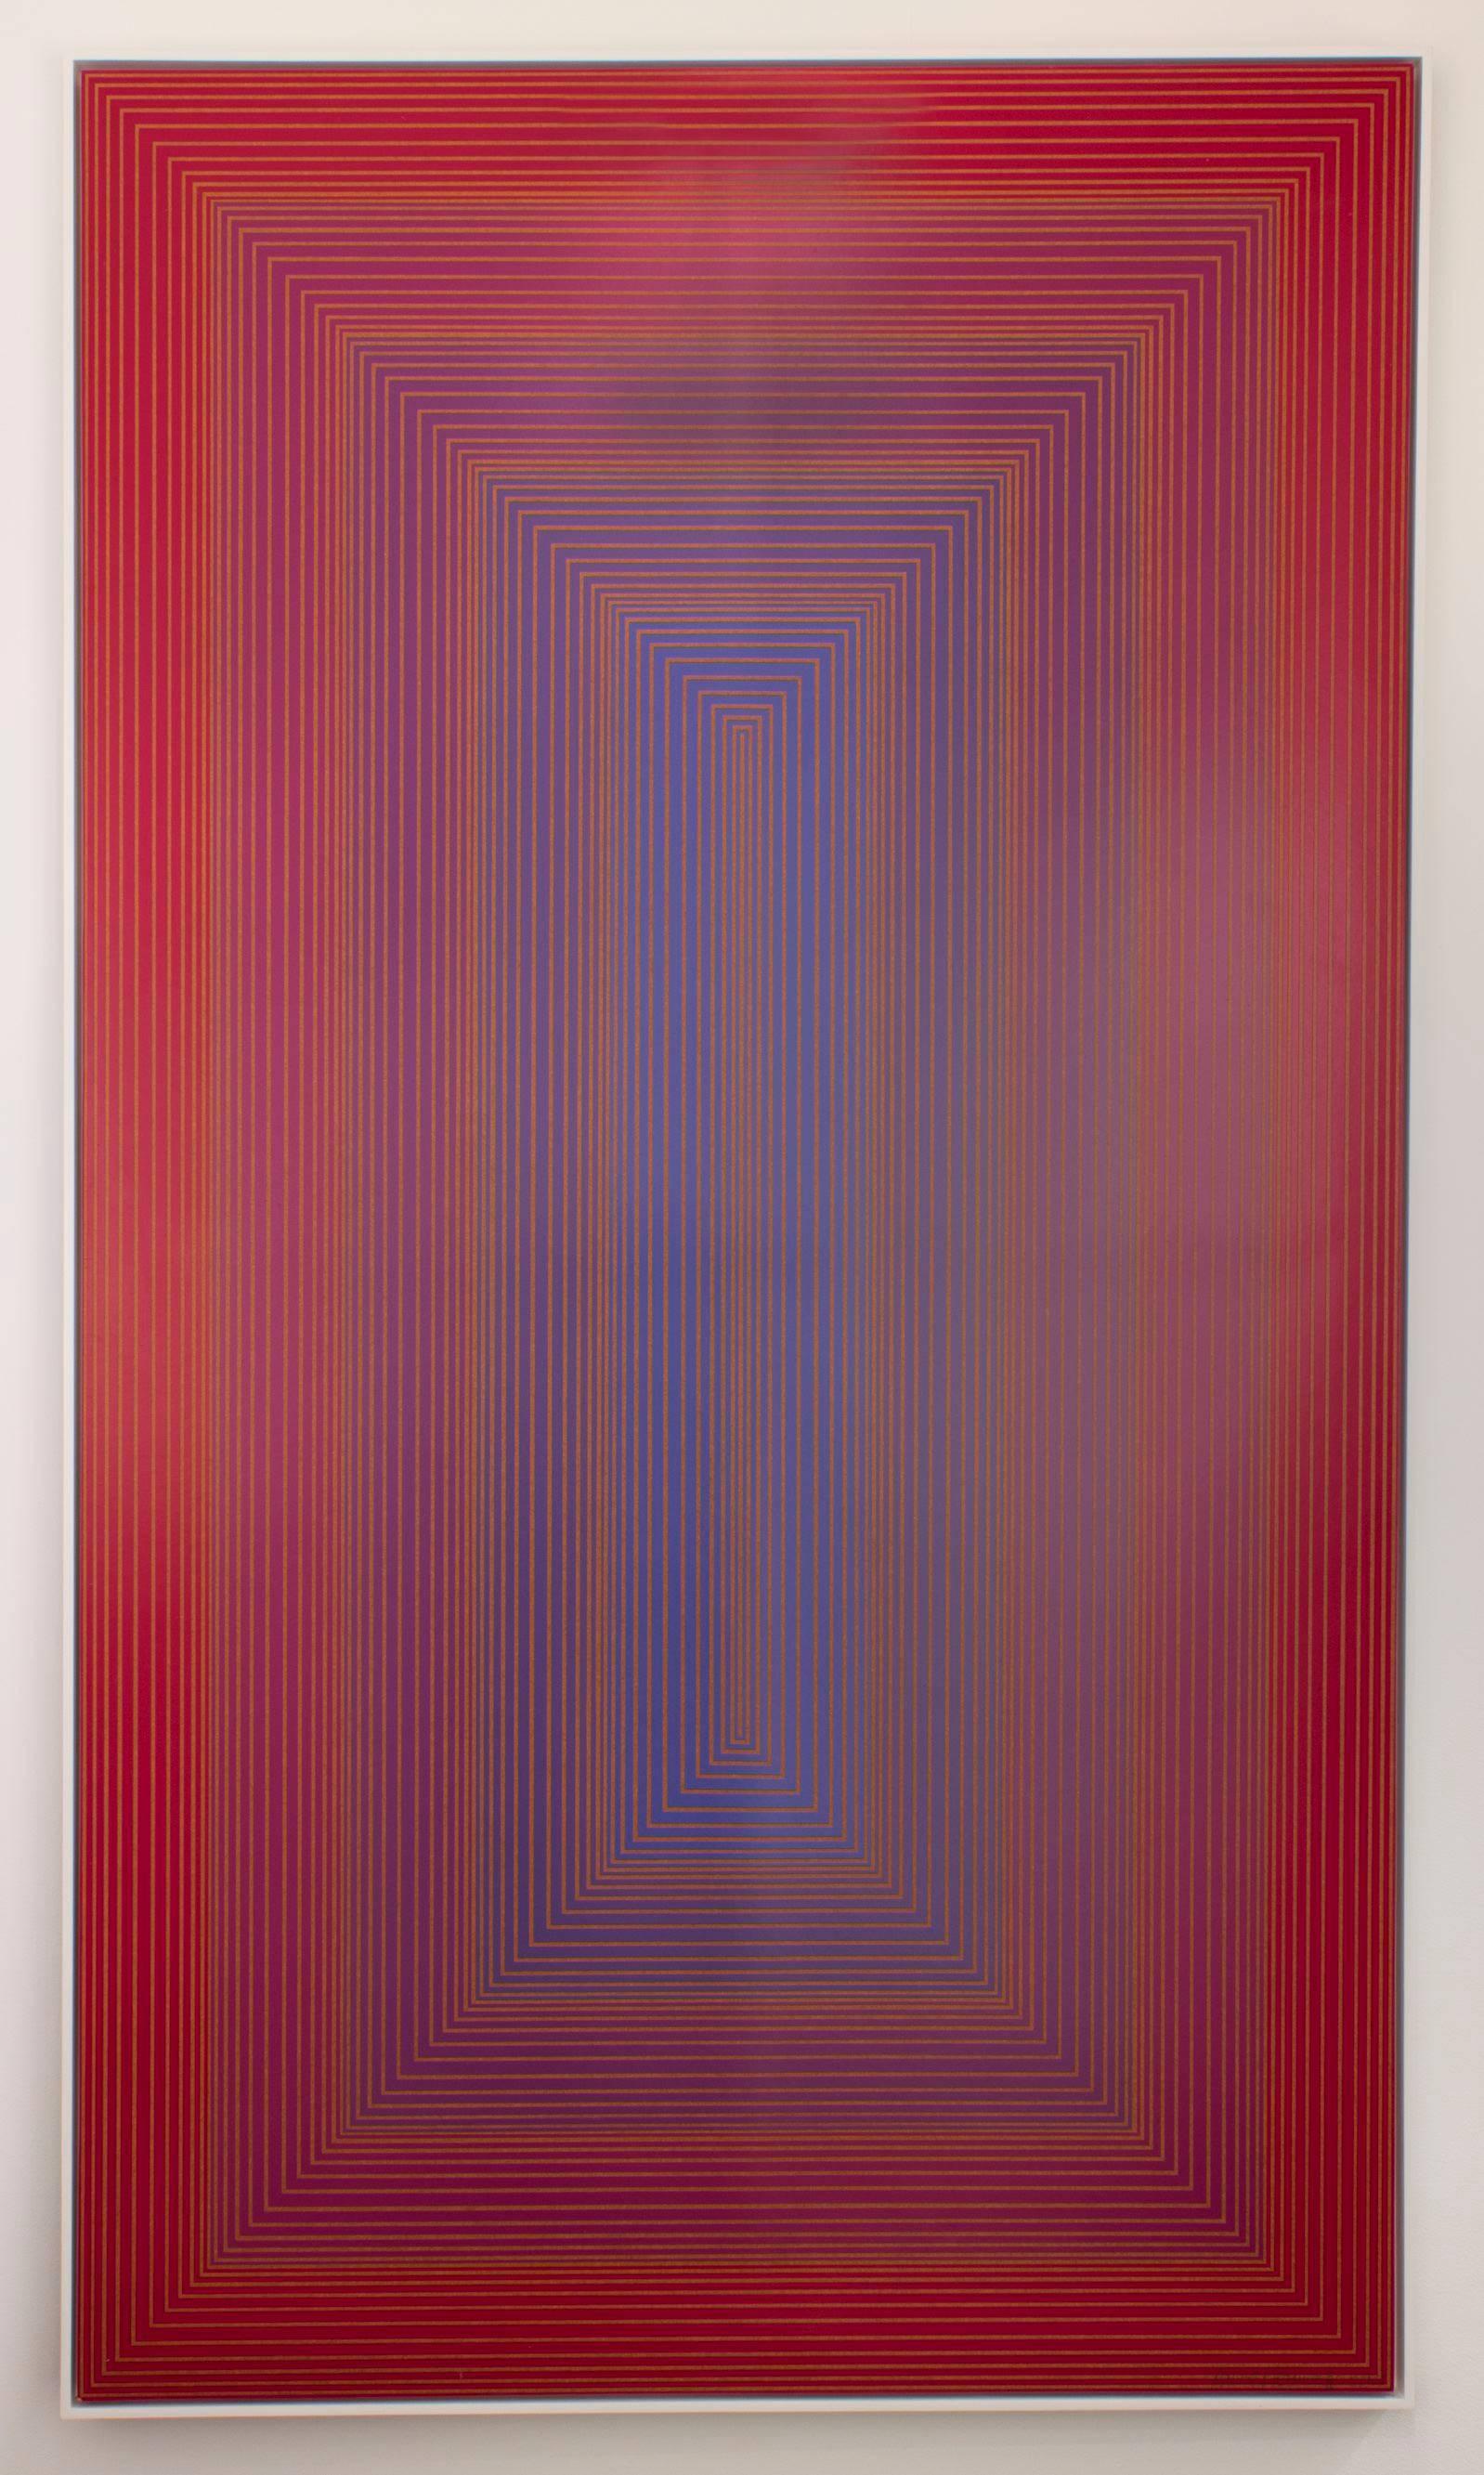 Richard Anuszkiewicz Abstract Print - Red to Blue Portal